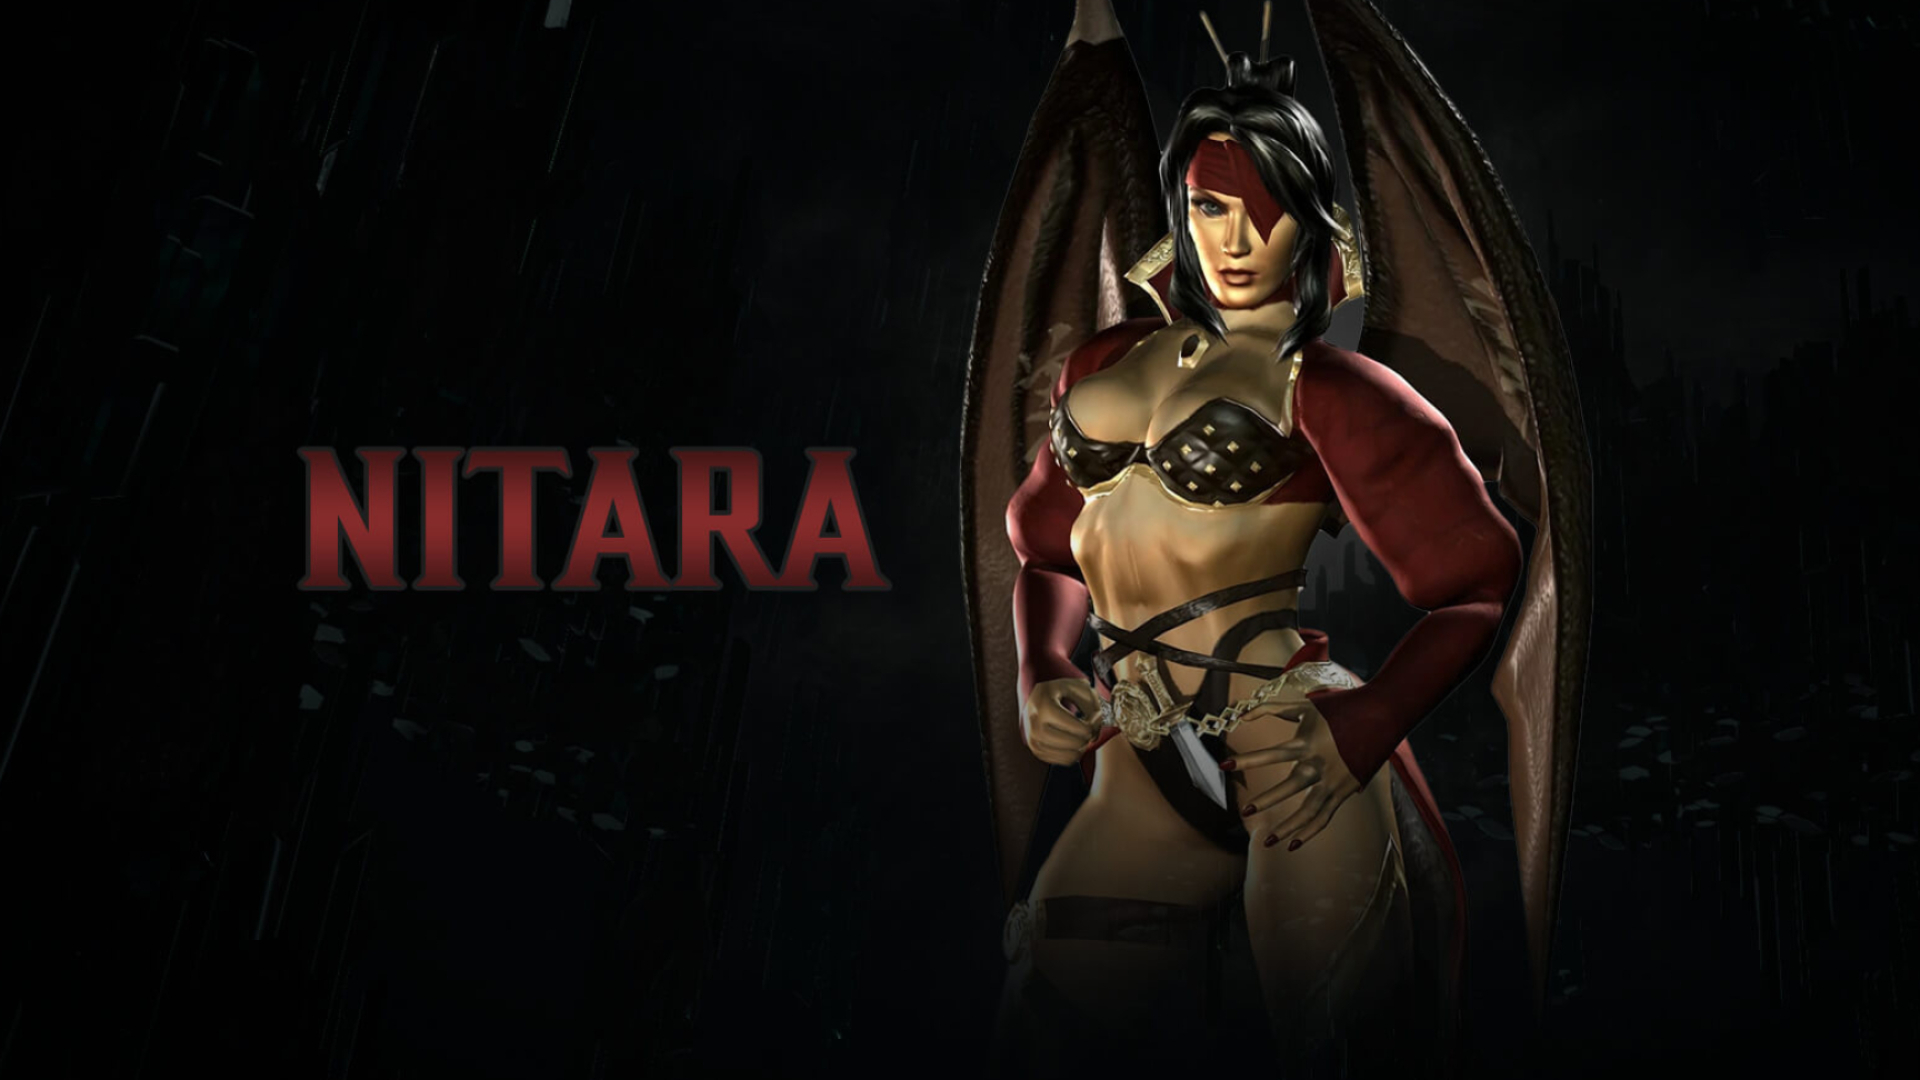 HD wallpaper, Nitara, Dashfight, Desktop Full Hd Nitara Background, Mortal Kombat Female Characters, 1920X1080 Full Hd Desktop